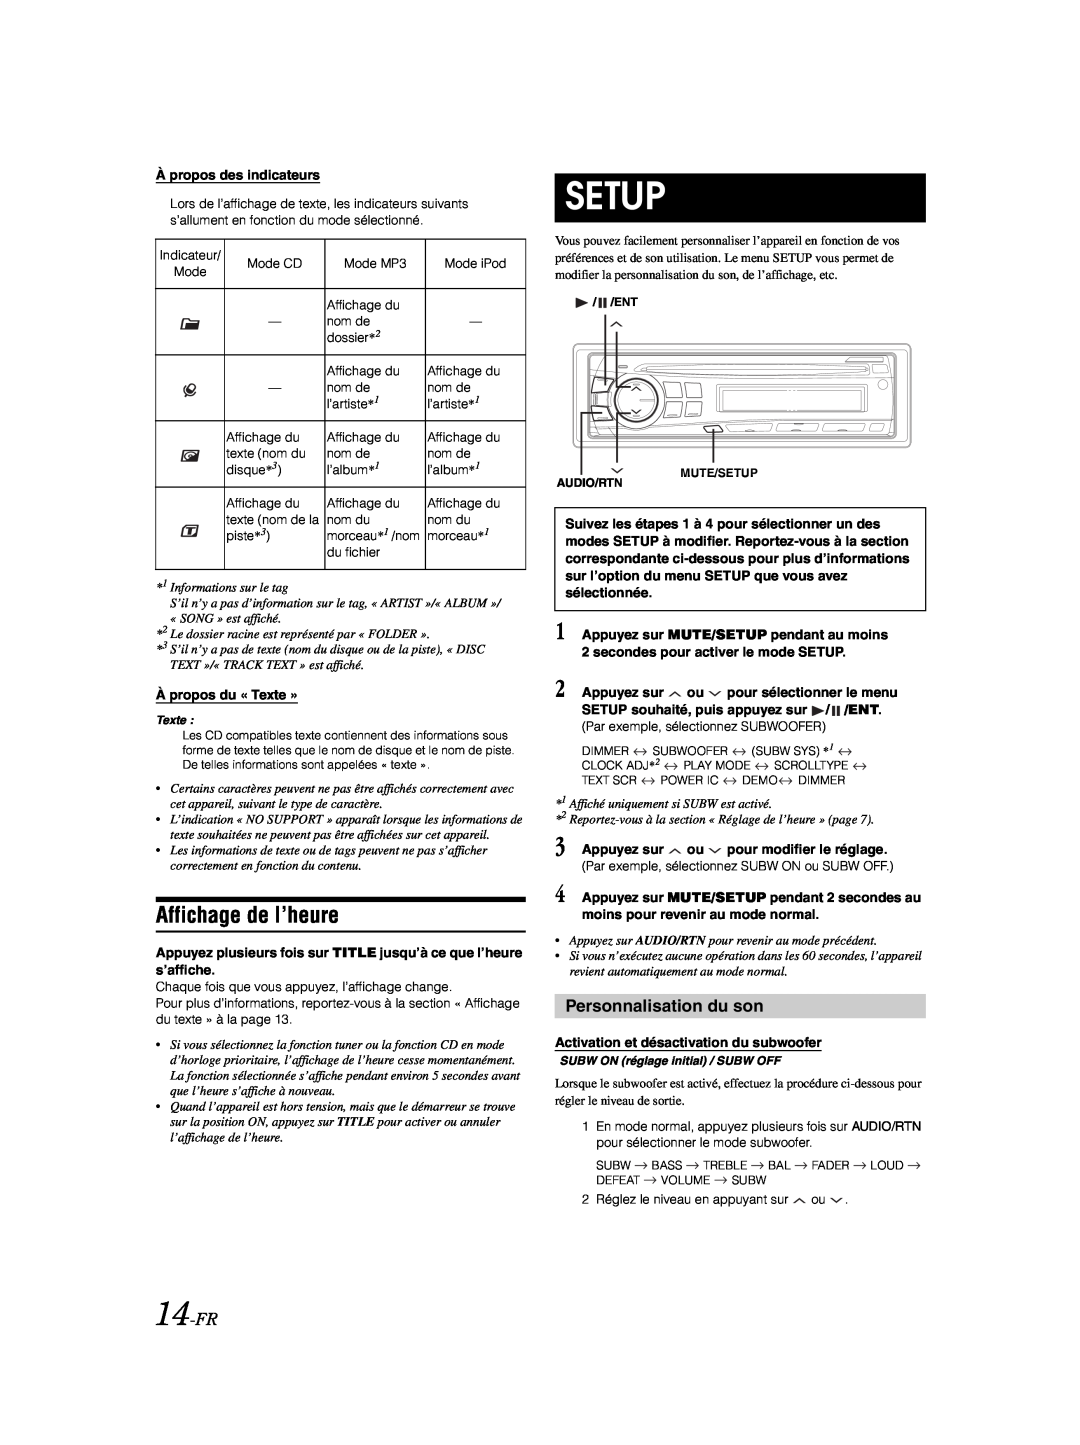 Alpine CDE-9870 owner manual Affichage de l’heure, Personnalisation du son, 14-FR, Setup 